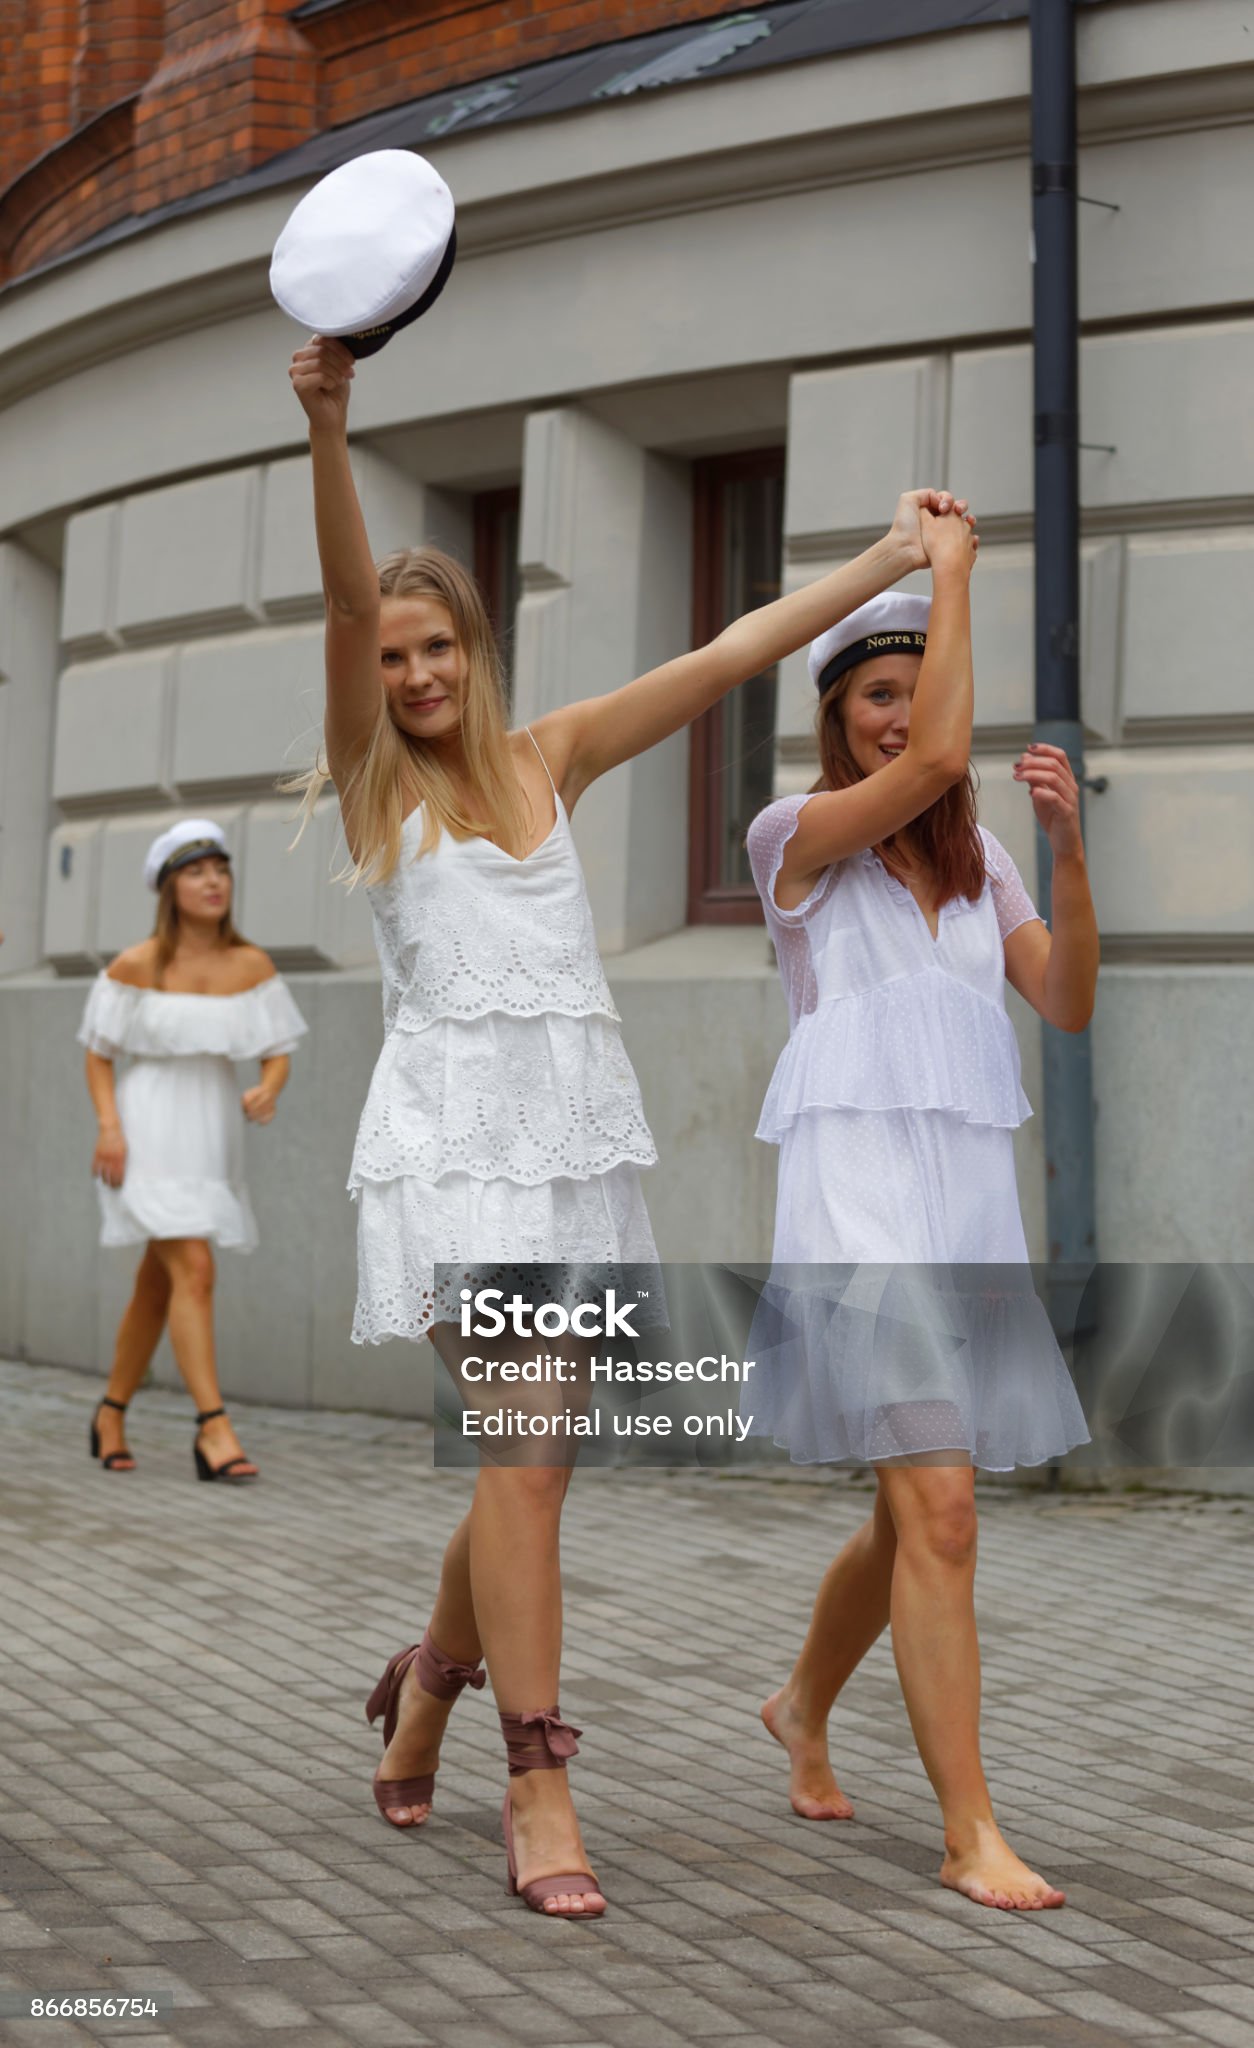 https://media.istockphoto.com/id/866856754/photo/smiling-swedish-female-students-in-white-resses-after-graduation.jpg?s=2048x2048&amp;w=is&amp;k=20&amp;c=zstx1lJ3zYbtX0LBotORTIvxk6RaEgr4kdcwecwRRXU=